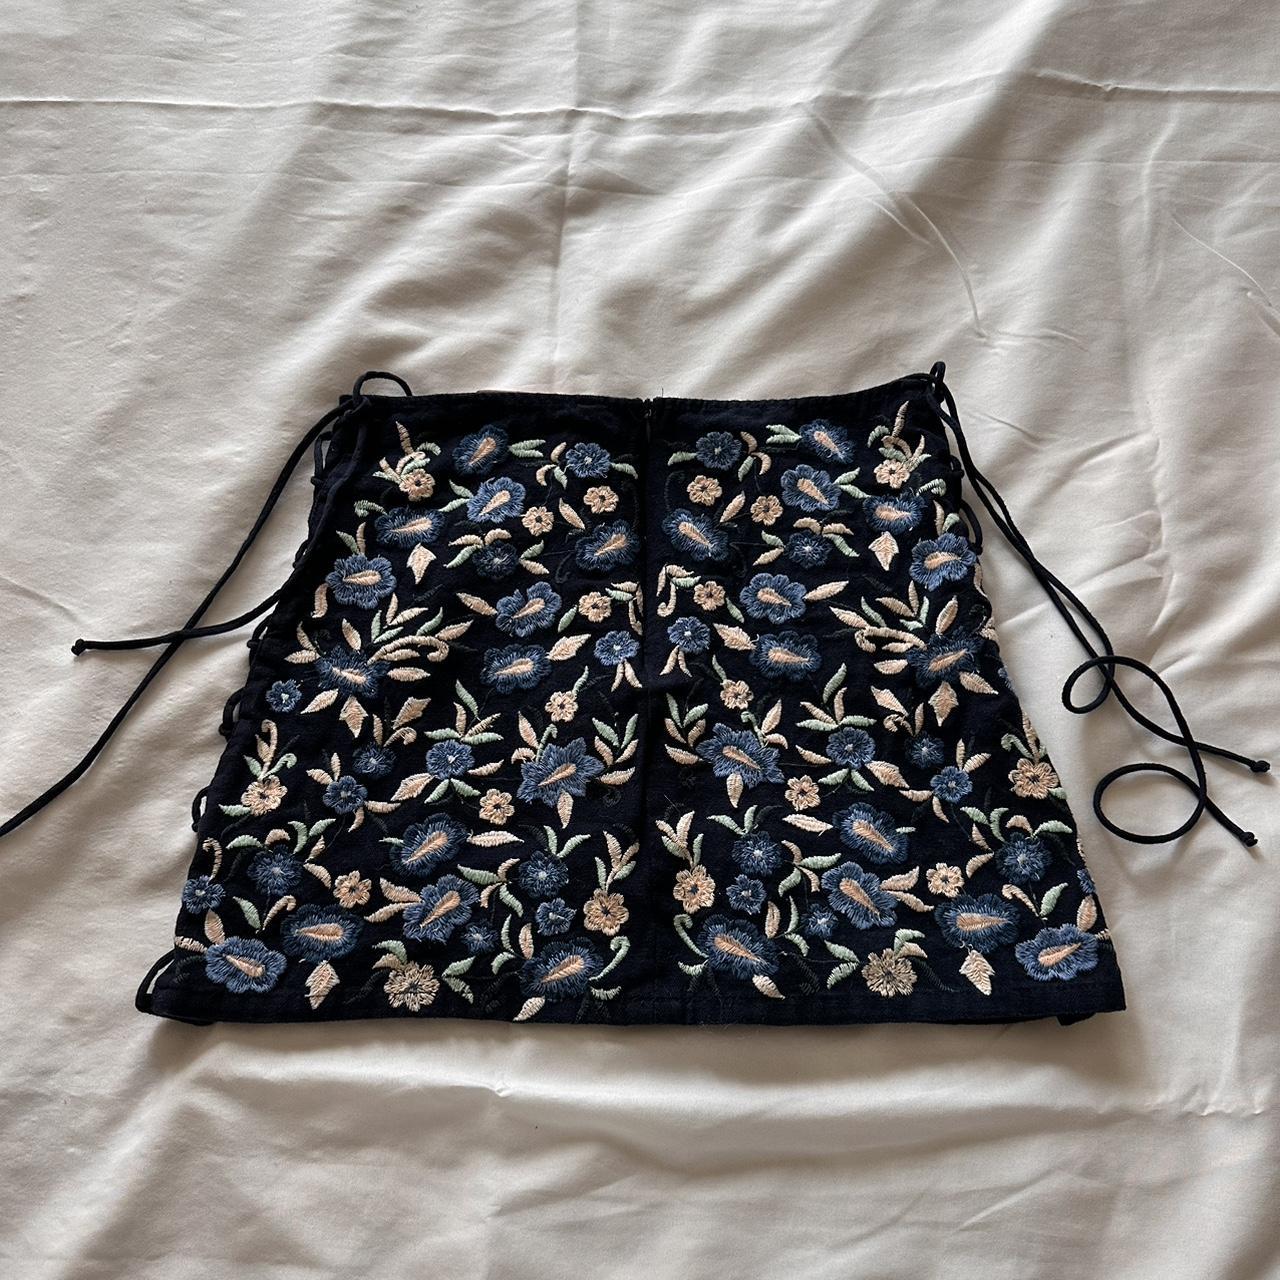 Zara Women's Navy and Blue Skirt (2)